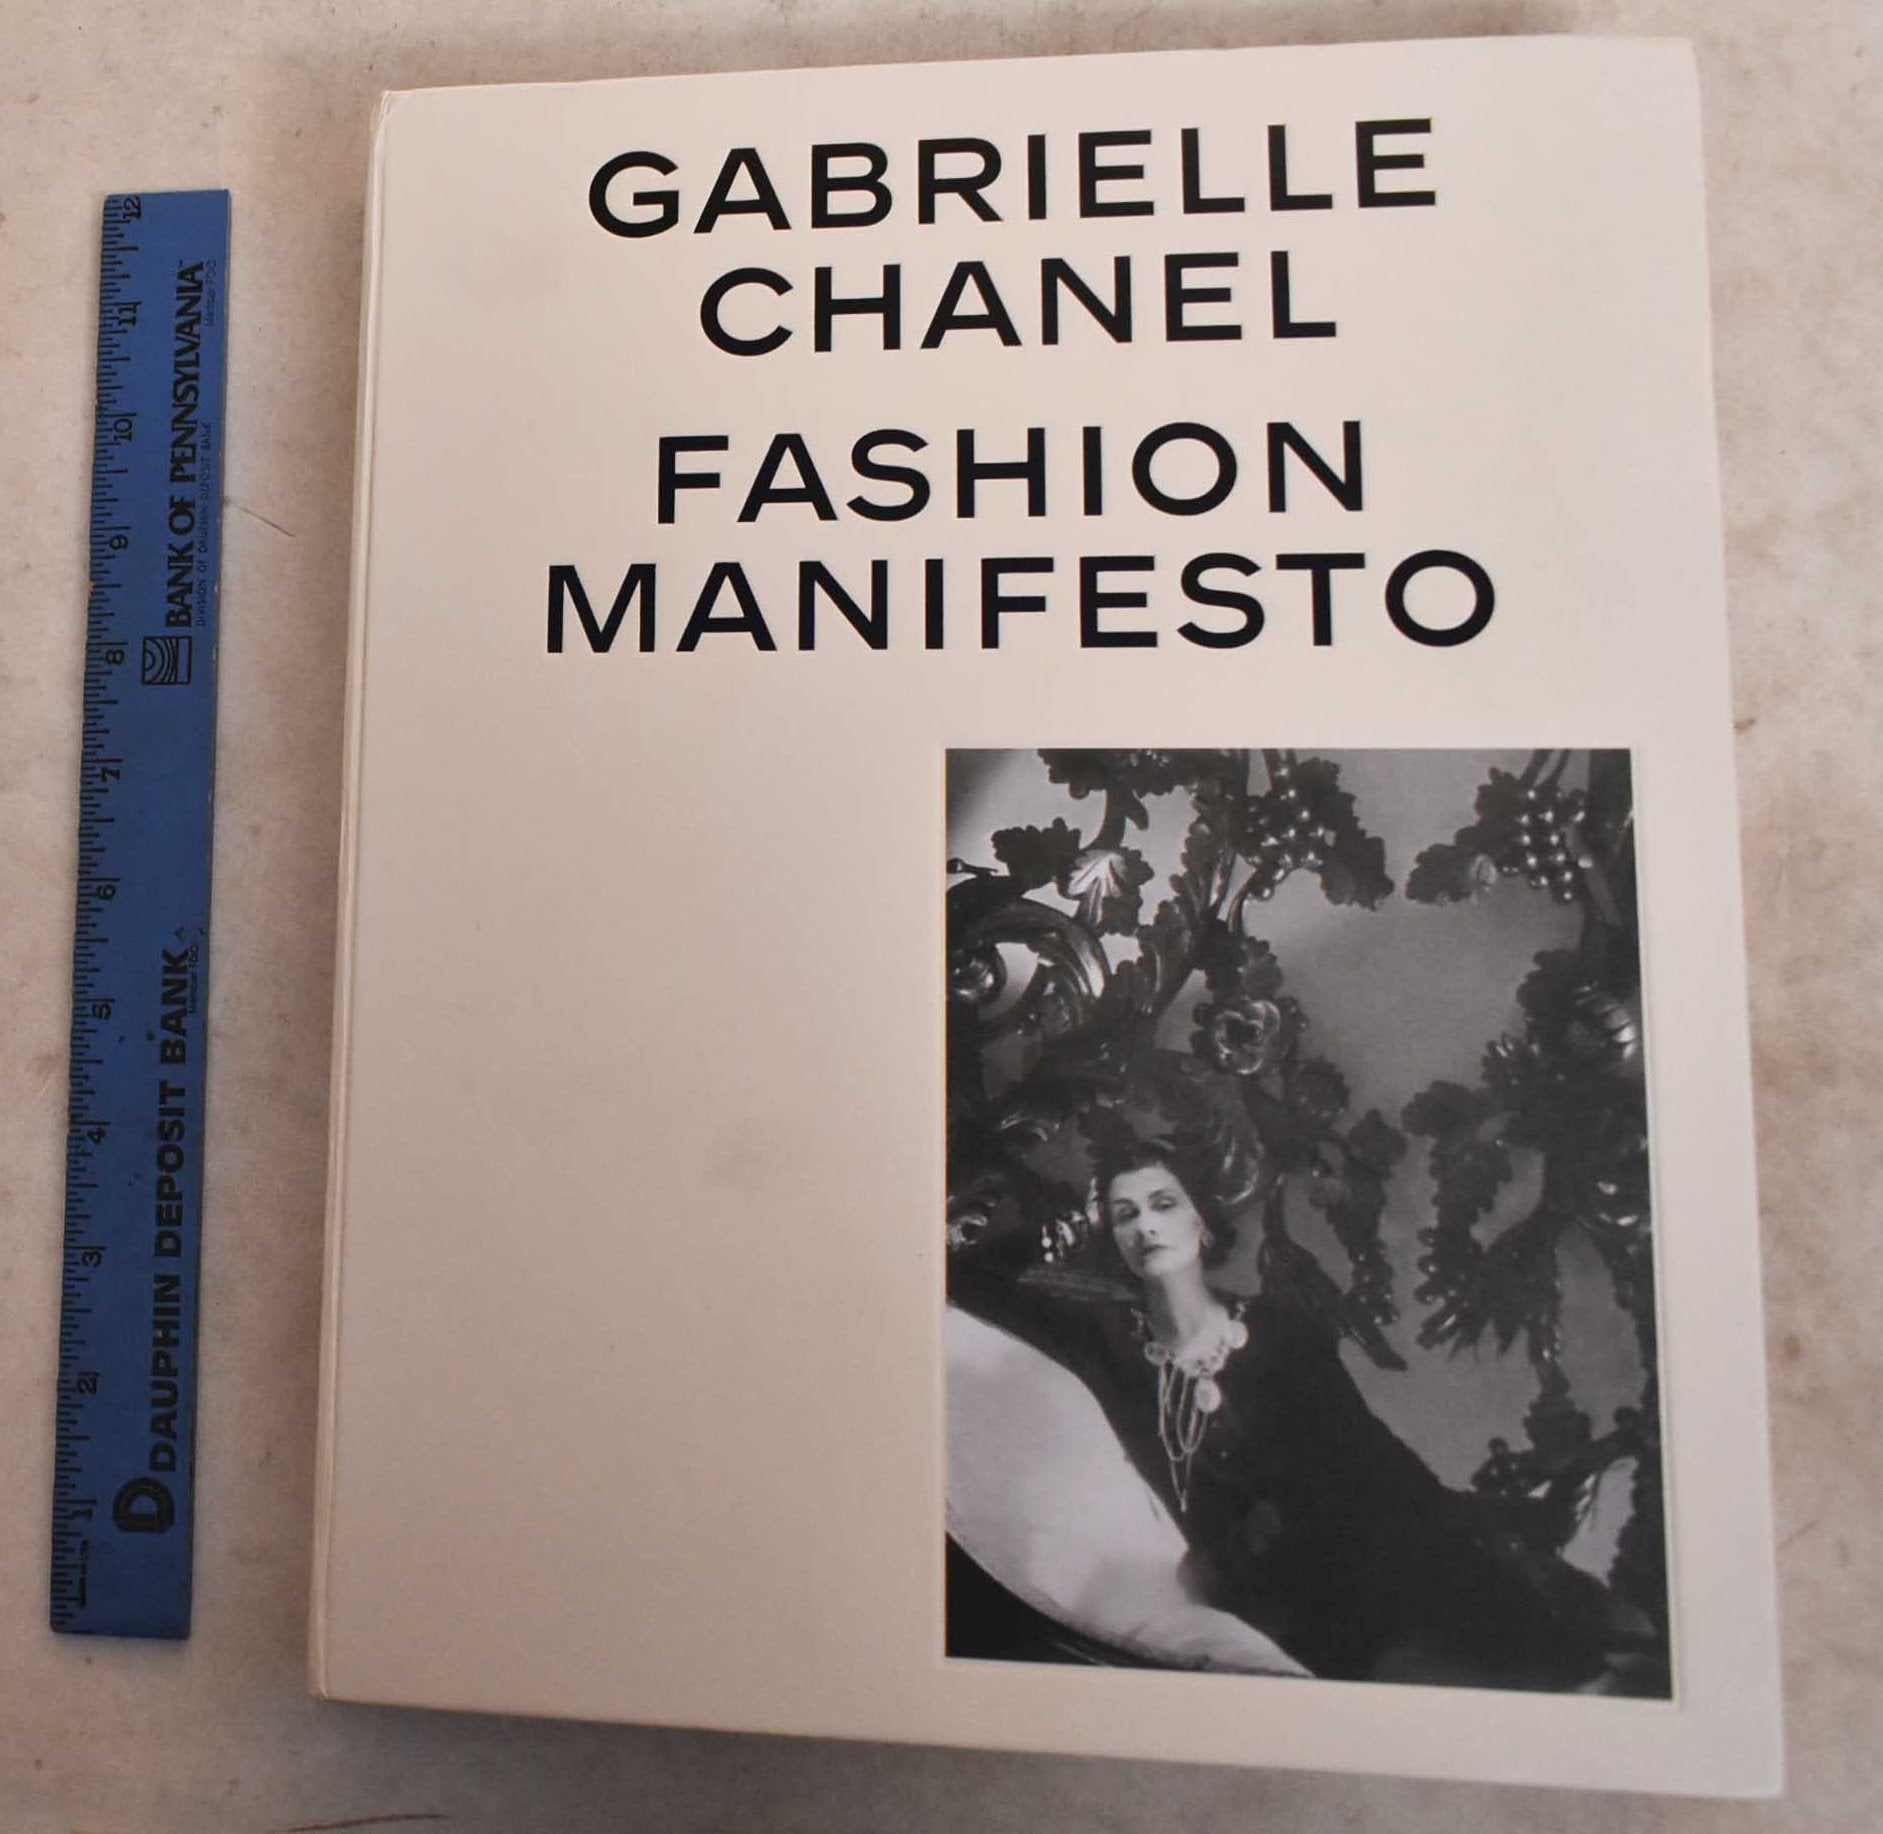 More than 215,000 visit Gabrielle Chanel. Fashion Manifesto at the NGV